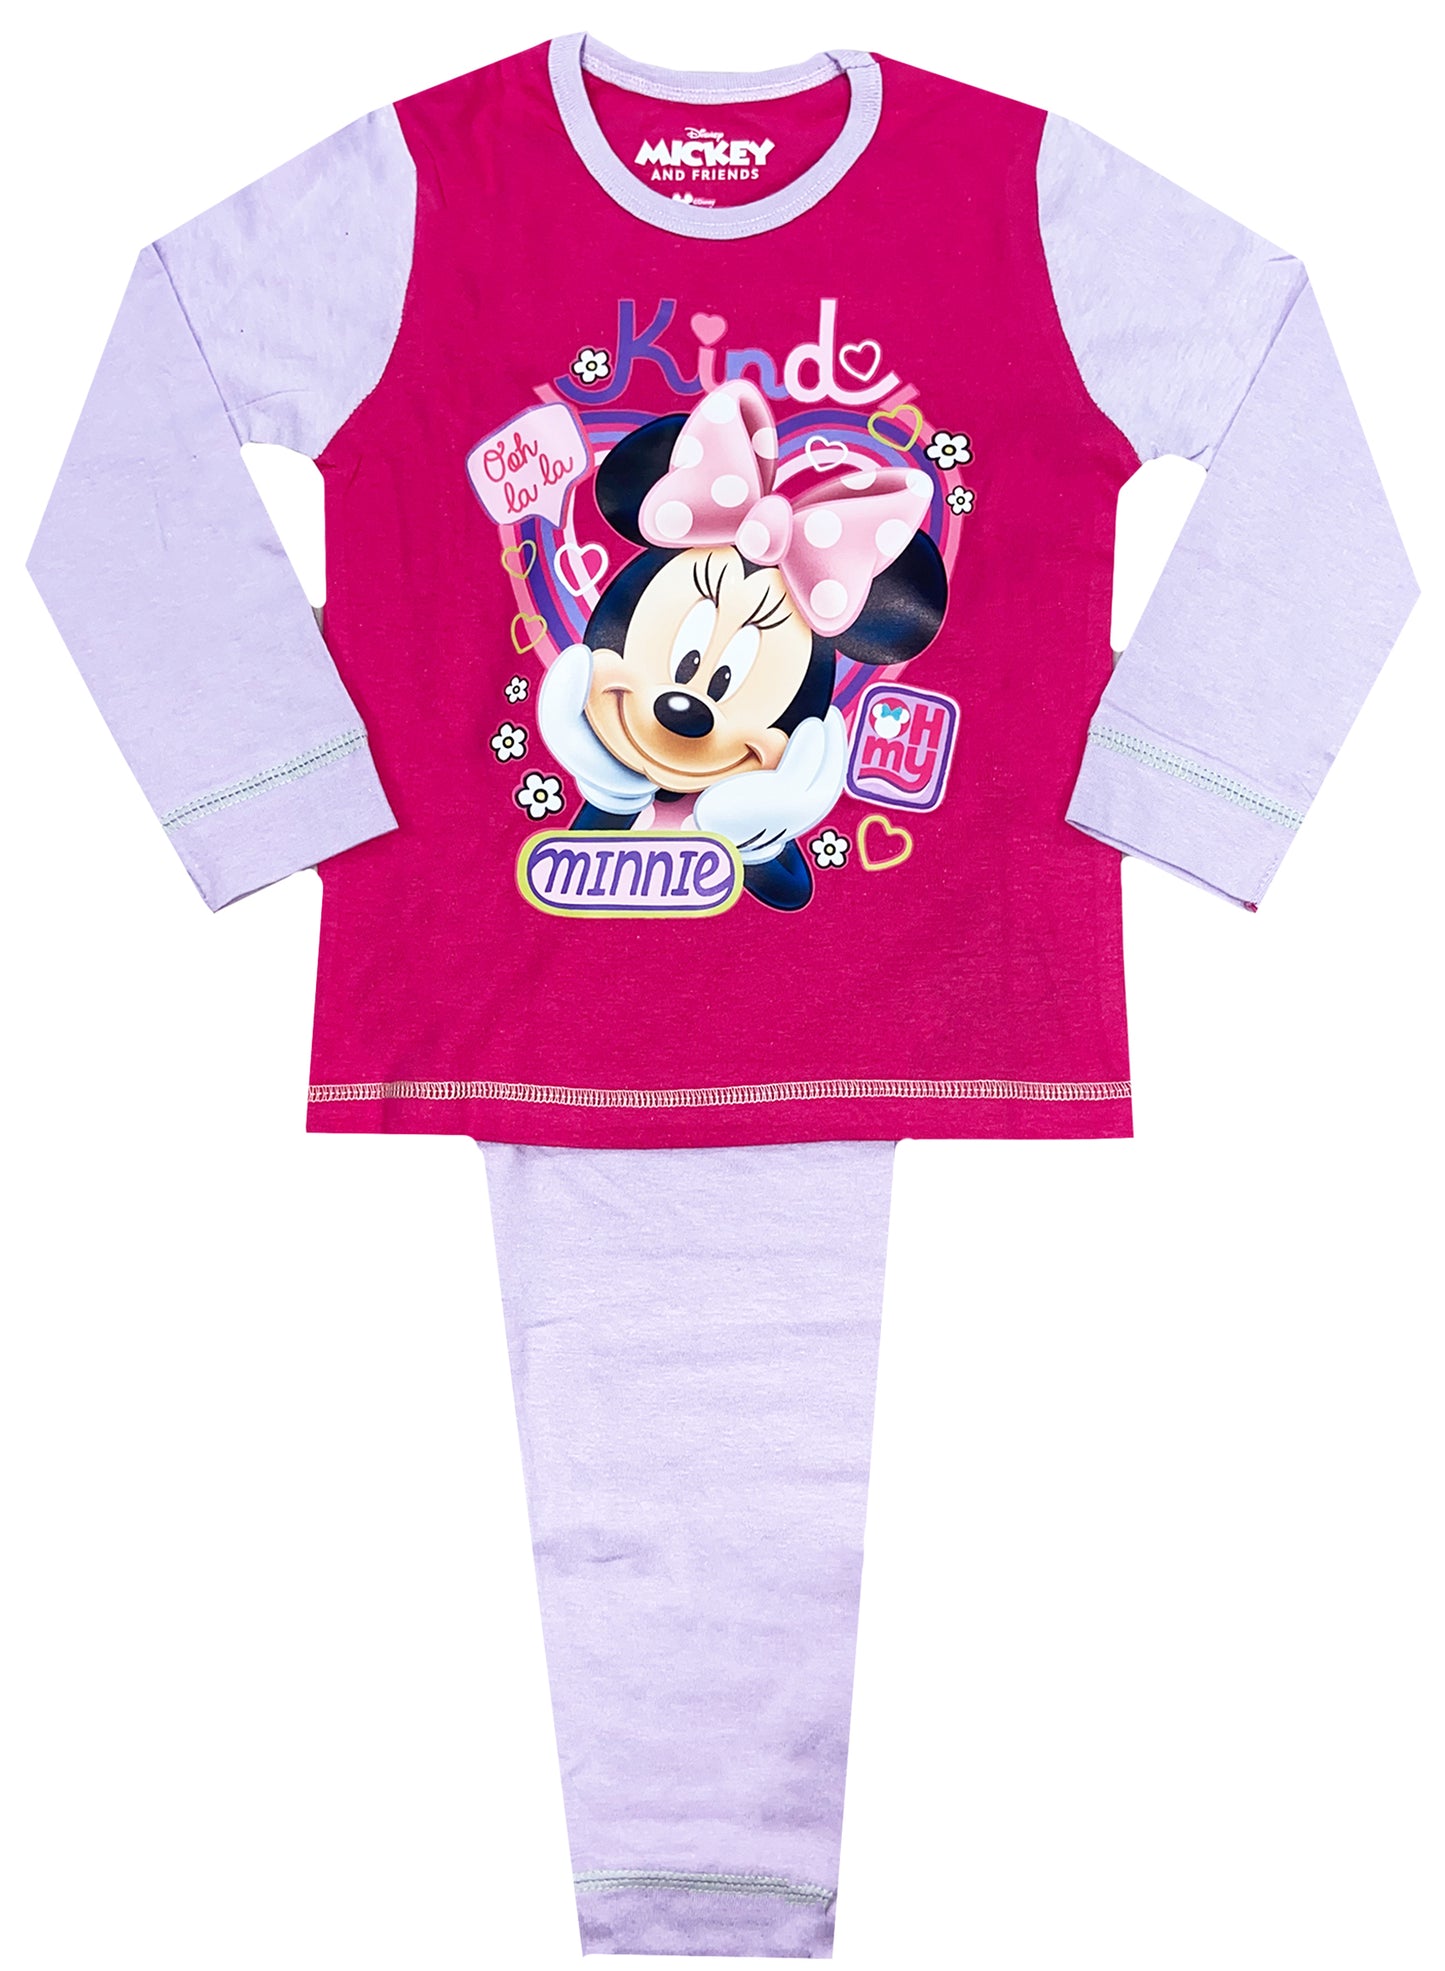 Girls Disney Minnie Mouse 'Kind' Pyjamas